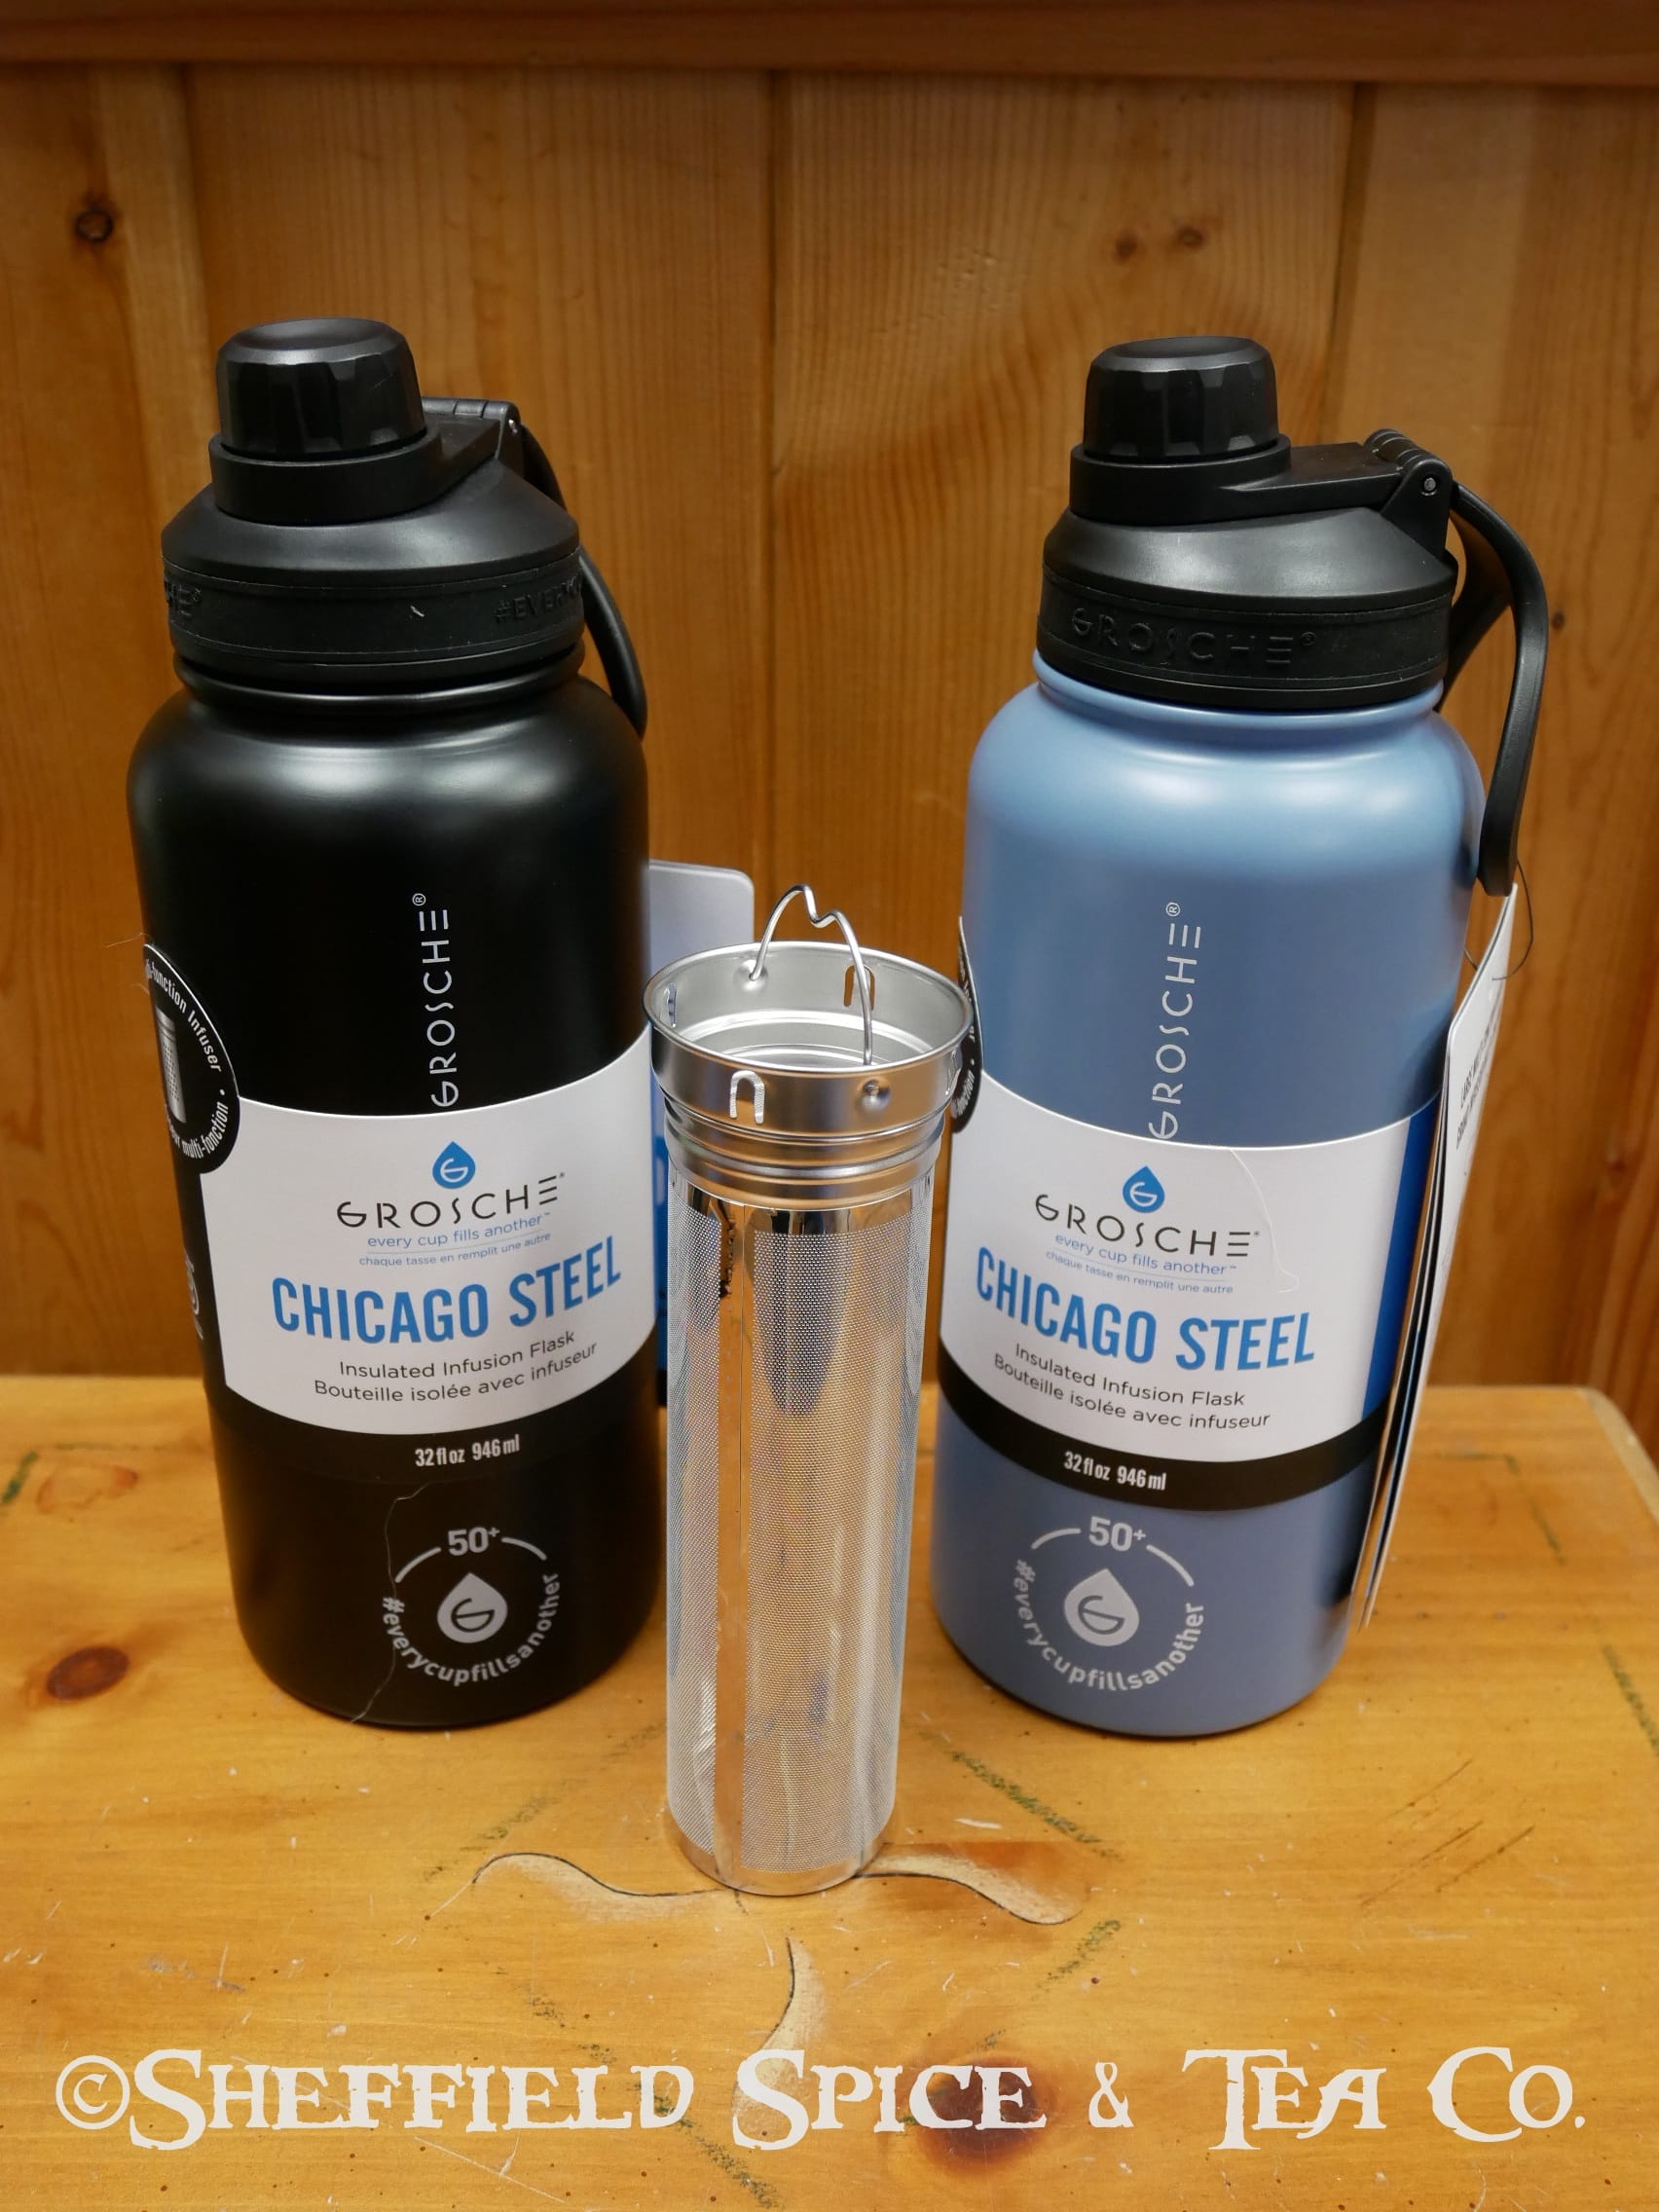 https://epjr3q9r9ms.exactdn.com/wp-content/uploads/2022/07/chicago-steel-insulated-tea-infuser-bottles-set-32-image.jpg?strip=all&lossy=1&ssl=1